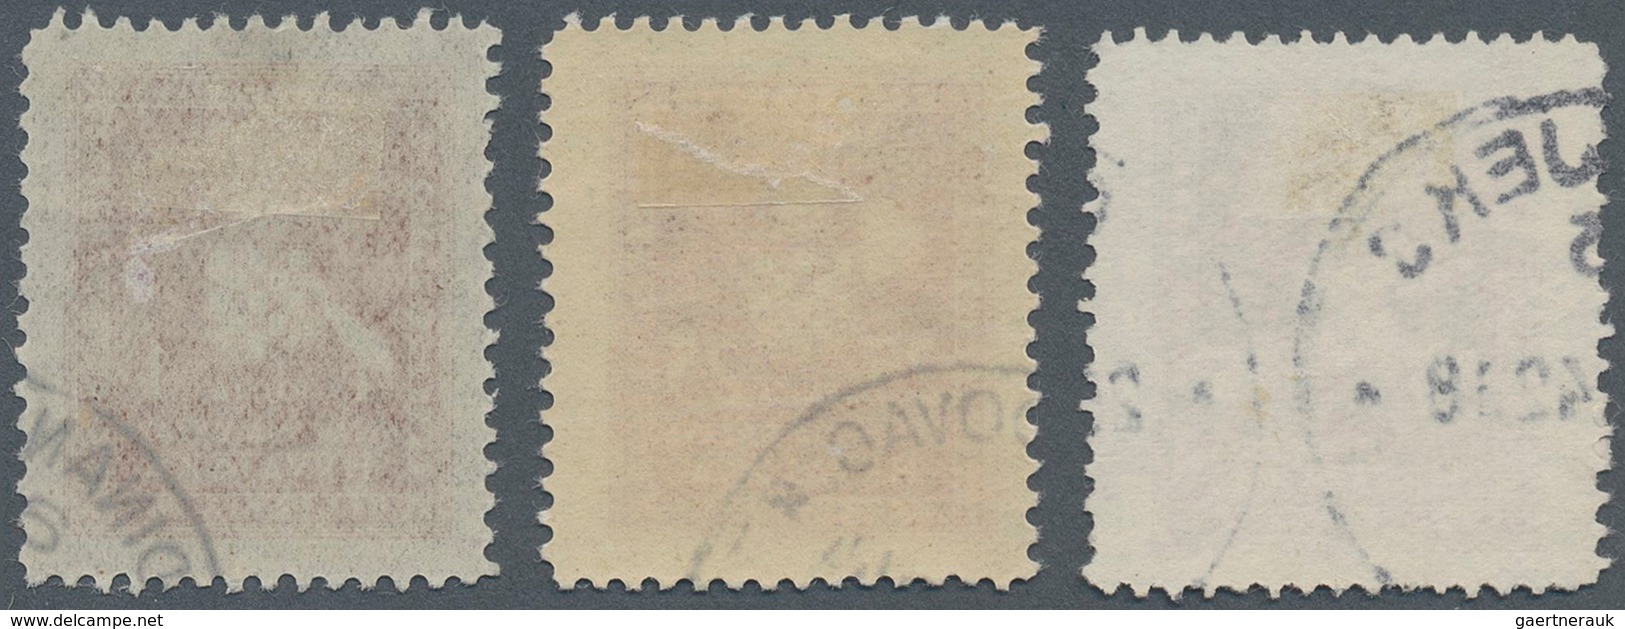 Kroatien - Dienstmarken: 1943, Real Used Official Letter To The Dive Squadron 102 In German-Brod Fra - Croatie